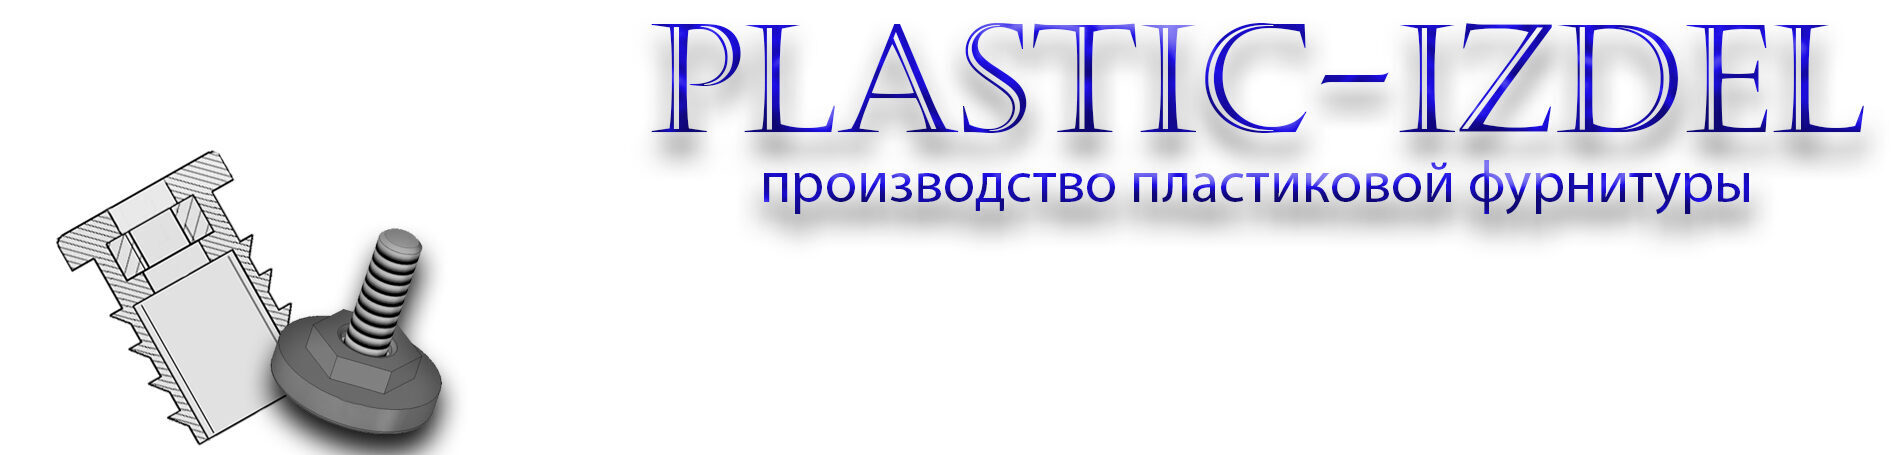 Plastic-izdel